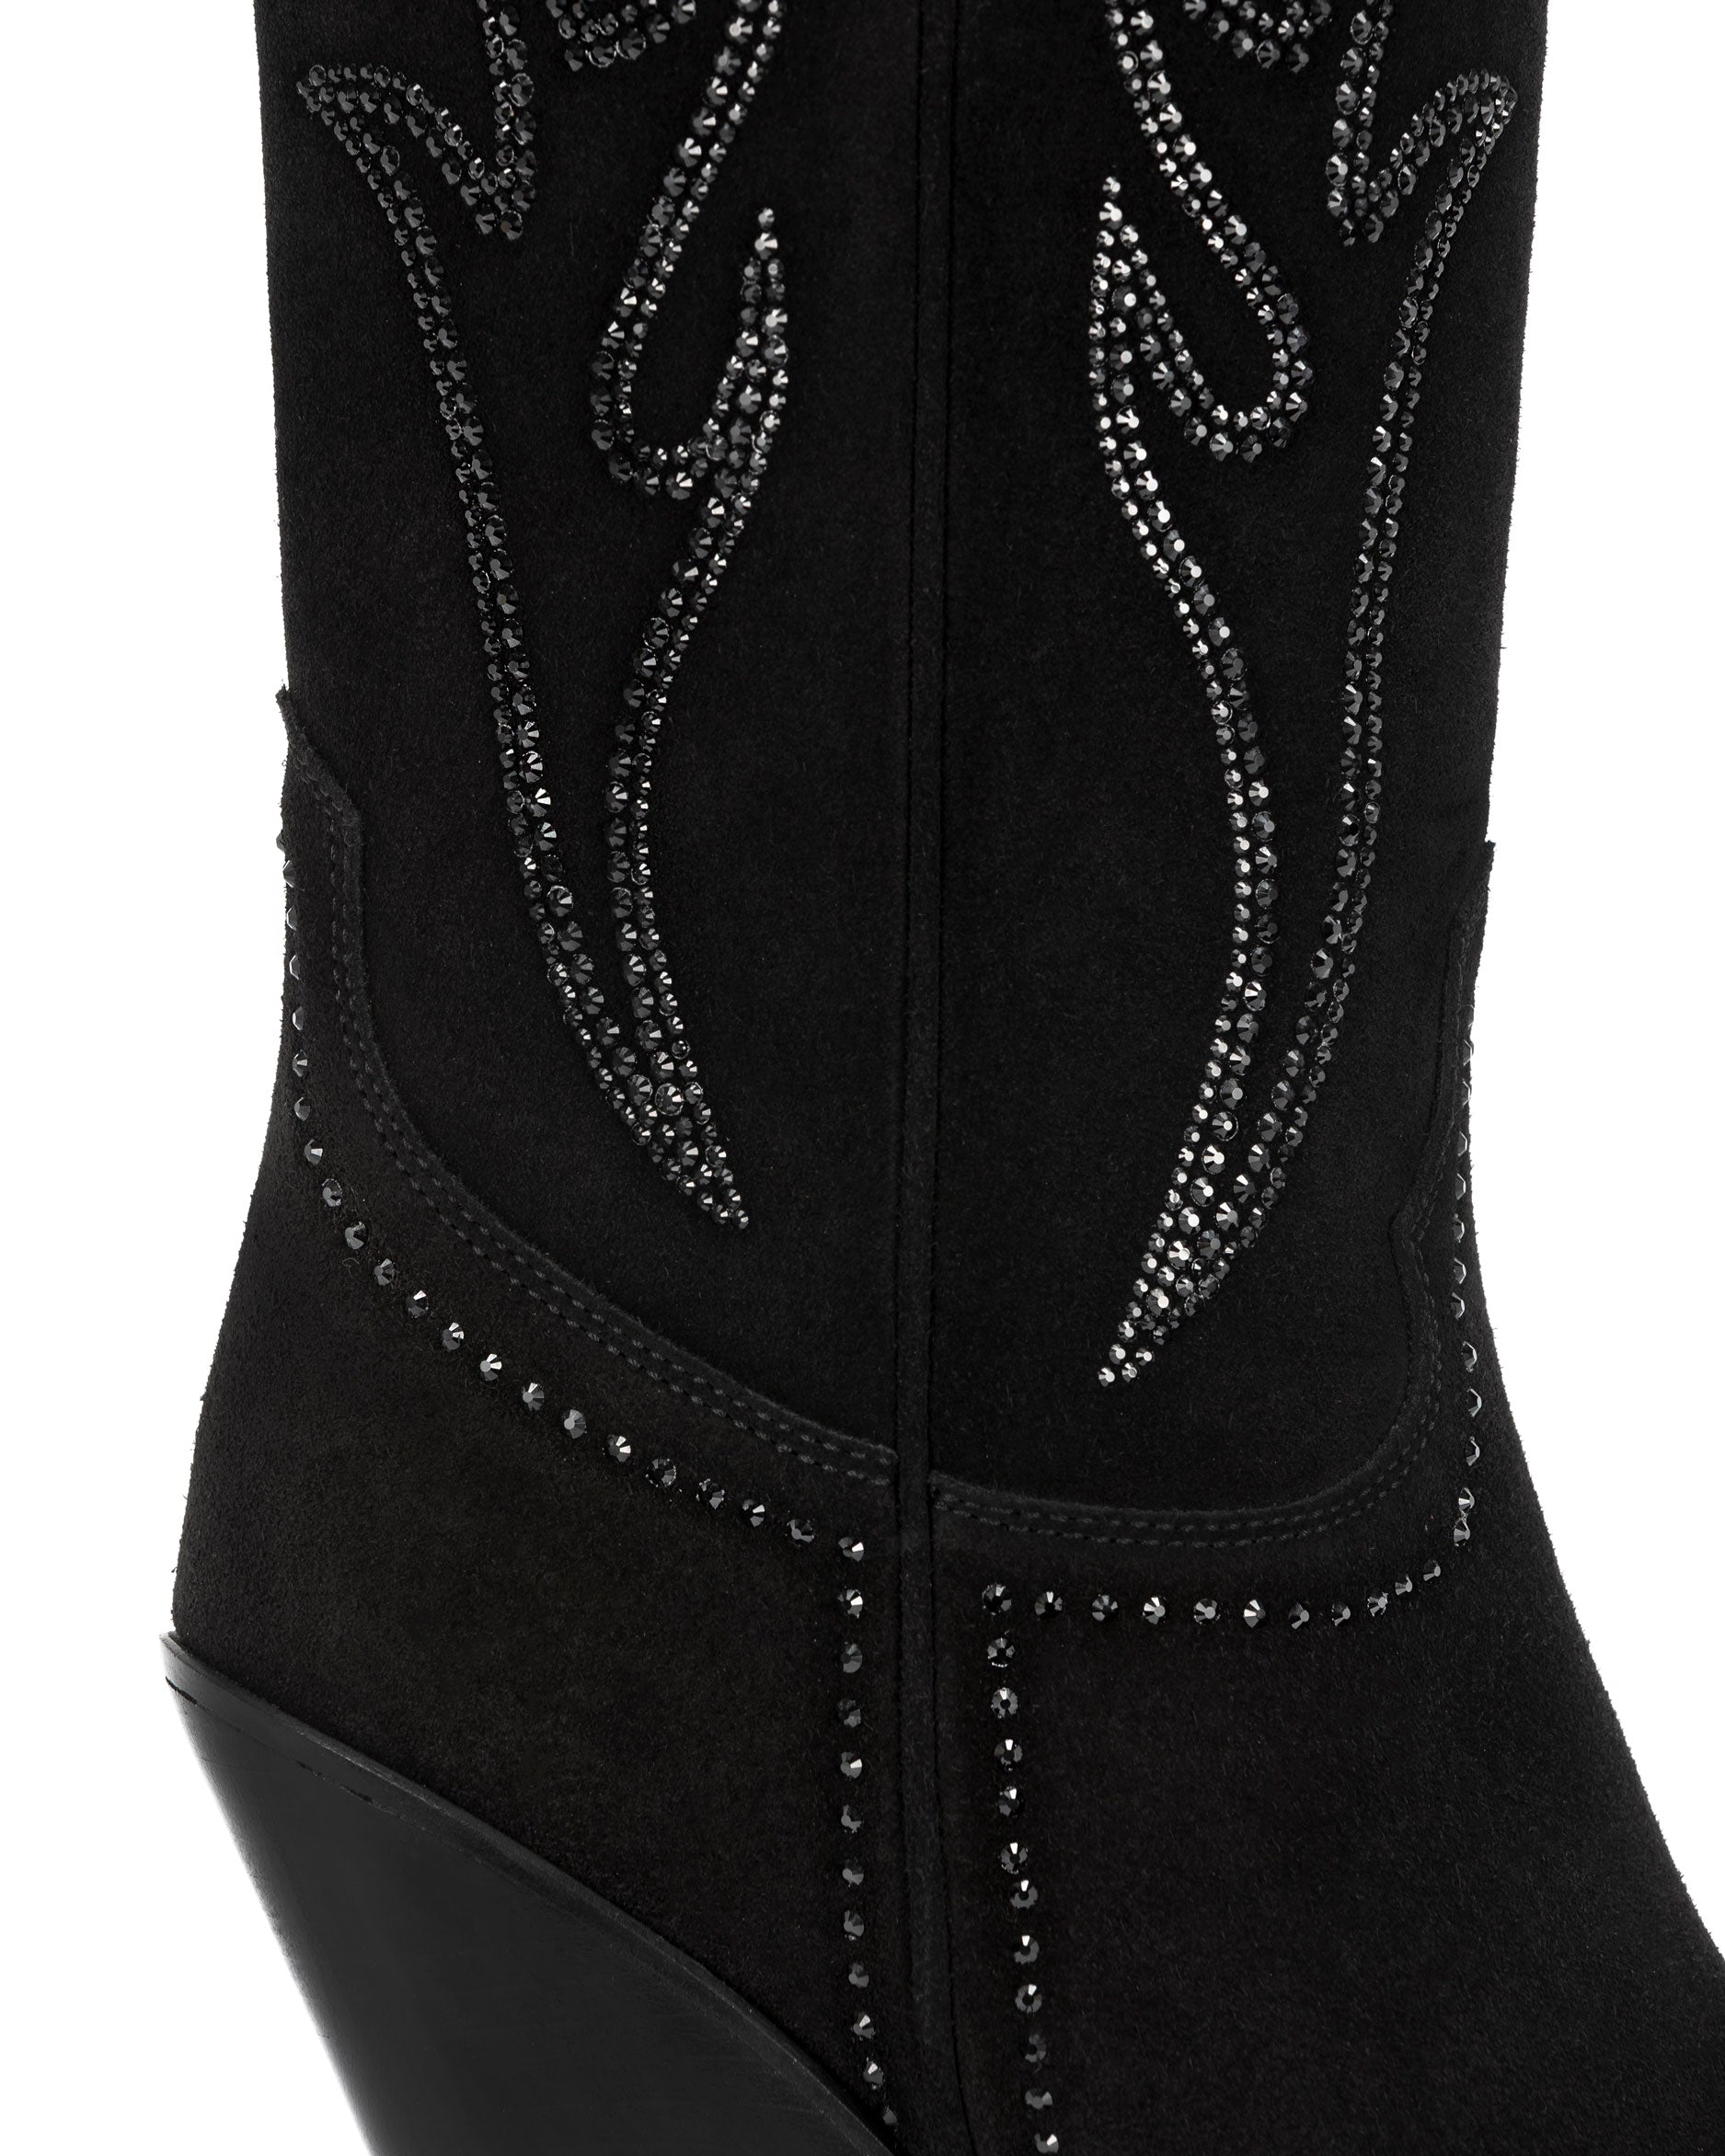    SANTA-FE-90-Women_s-Cowboy-Boots-in-Black-Suede-with-Black-Swarovski-Crystals_03_Detail